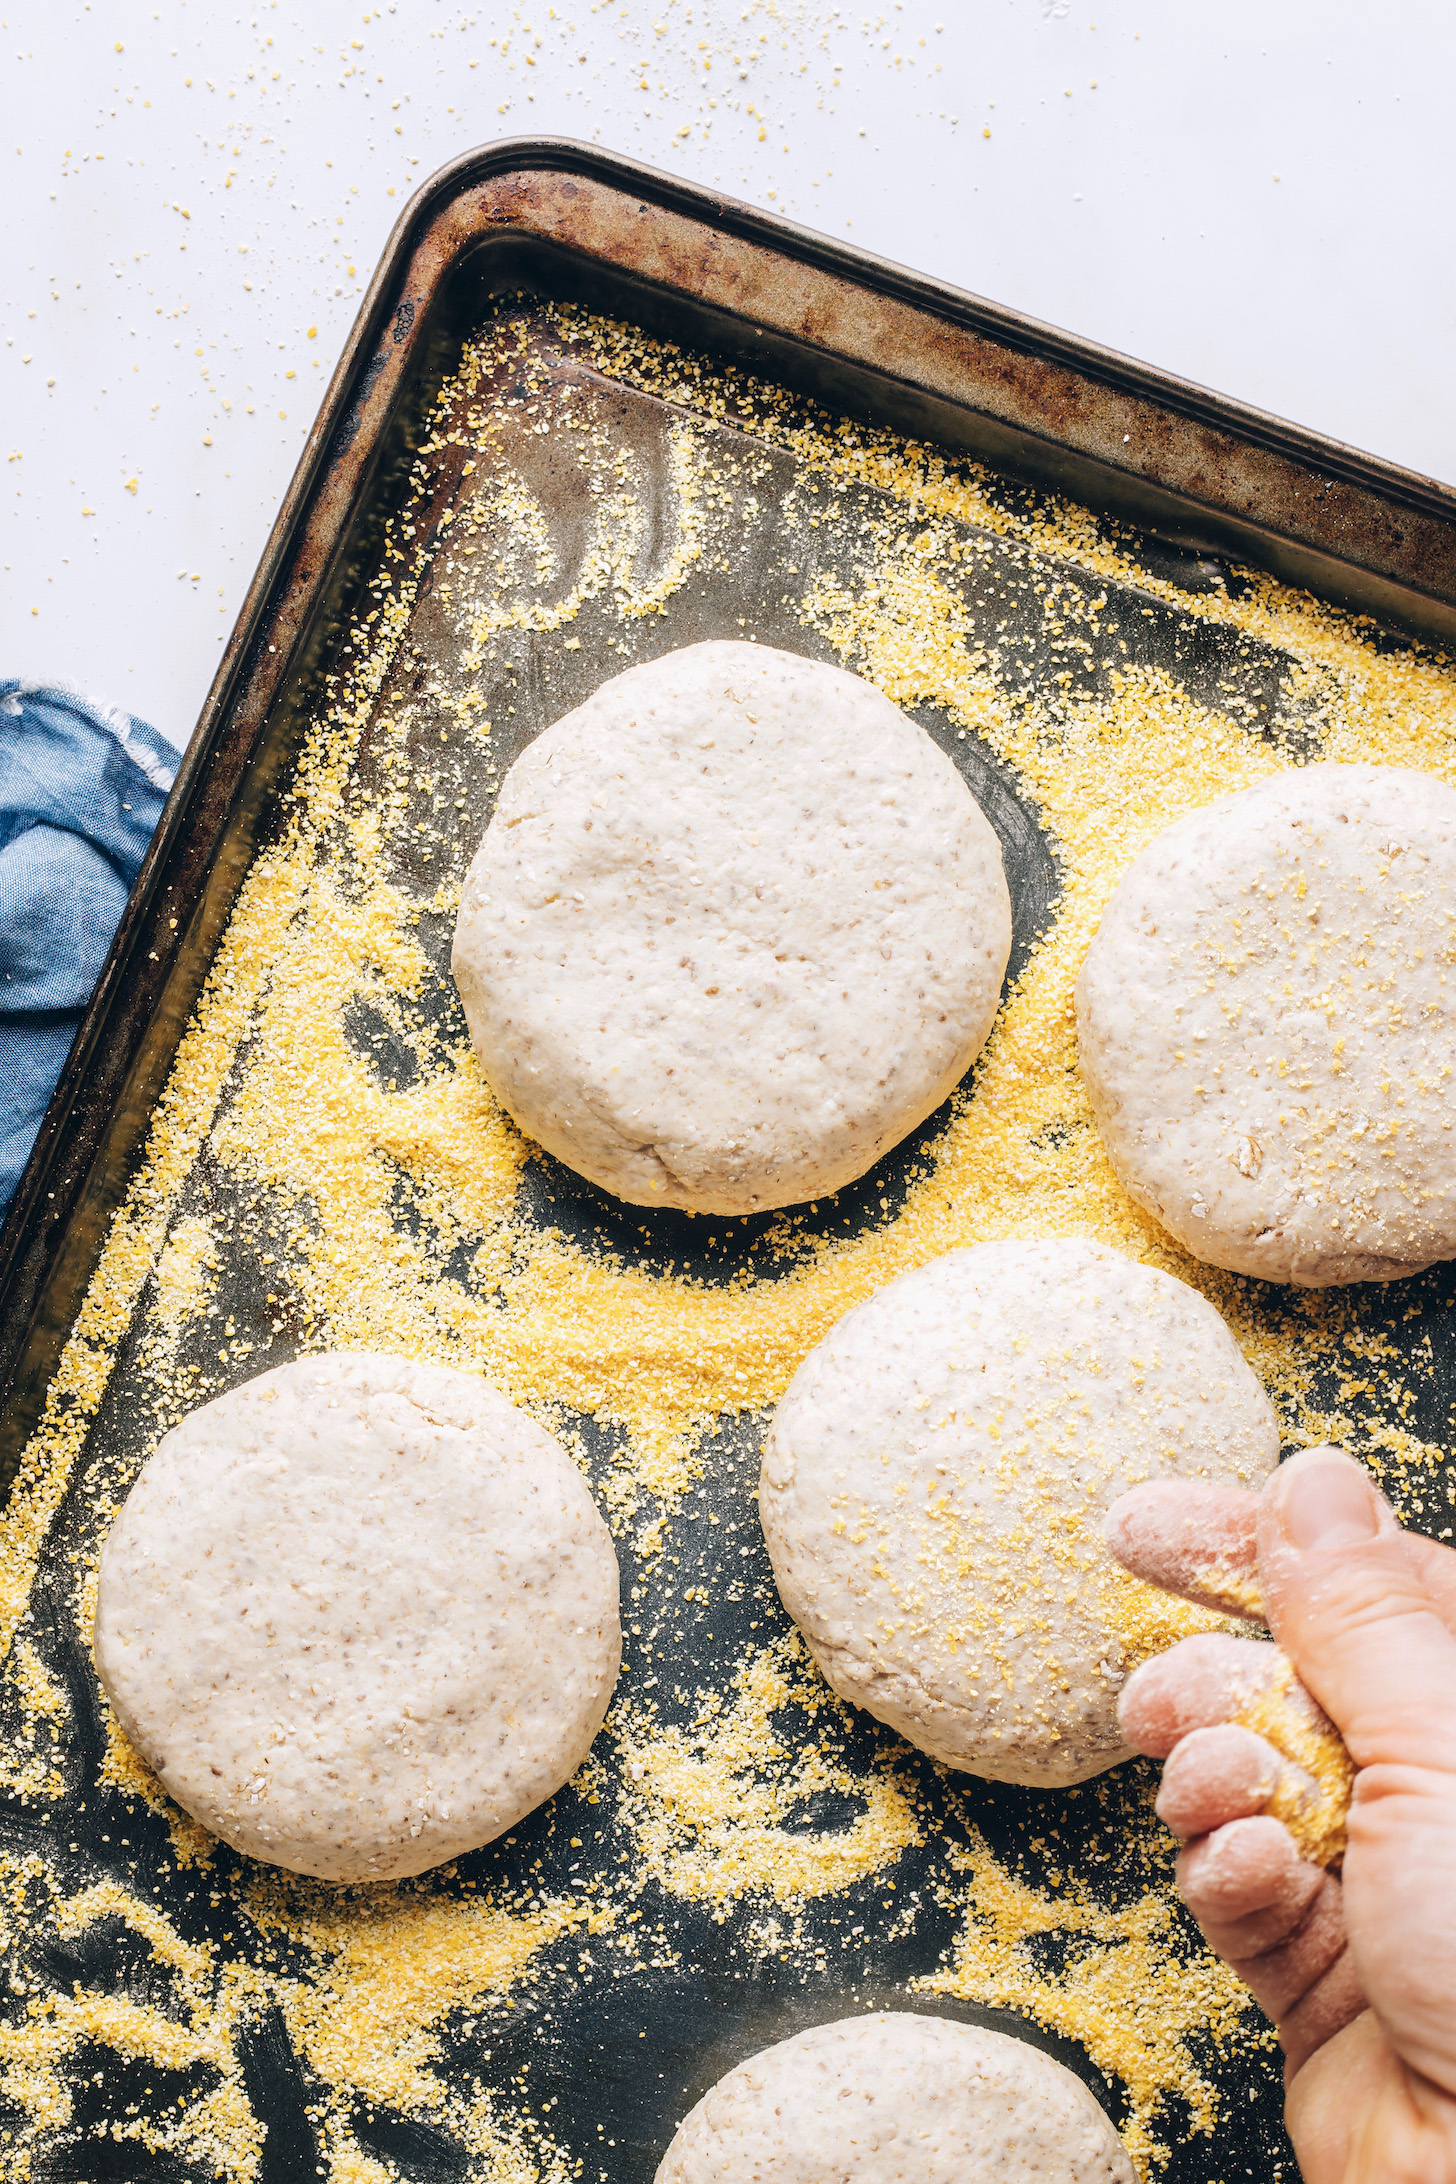 Sprinkling cornmeal over gluten-free English muffins